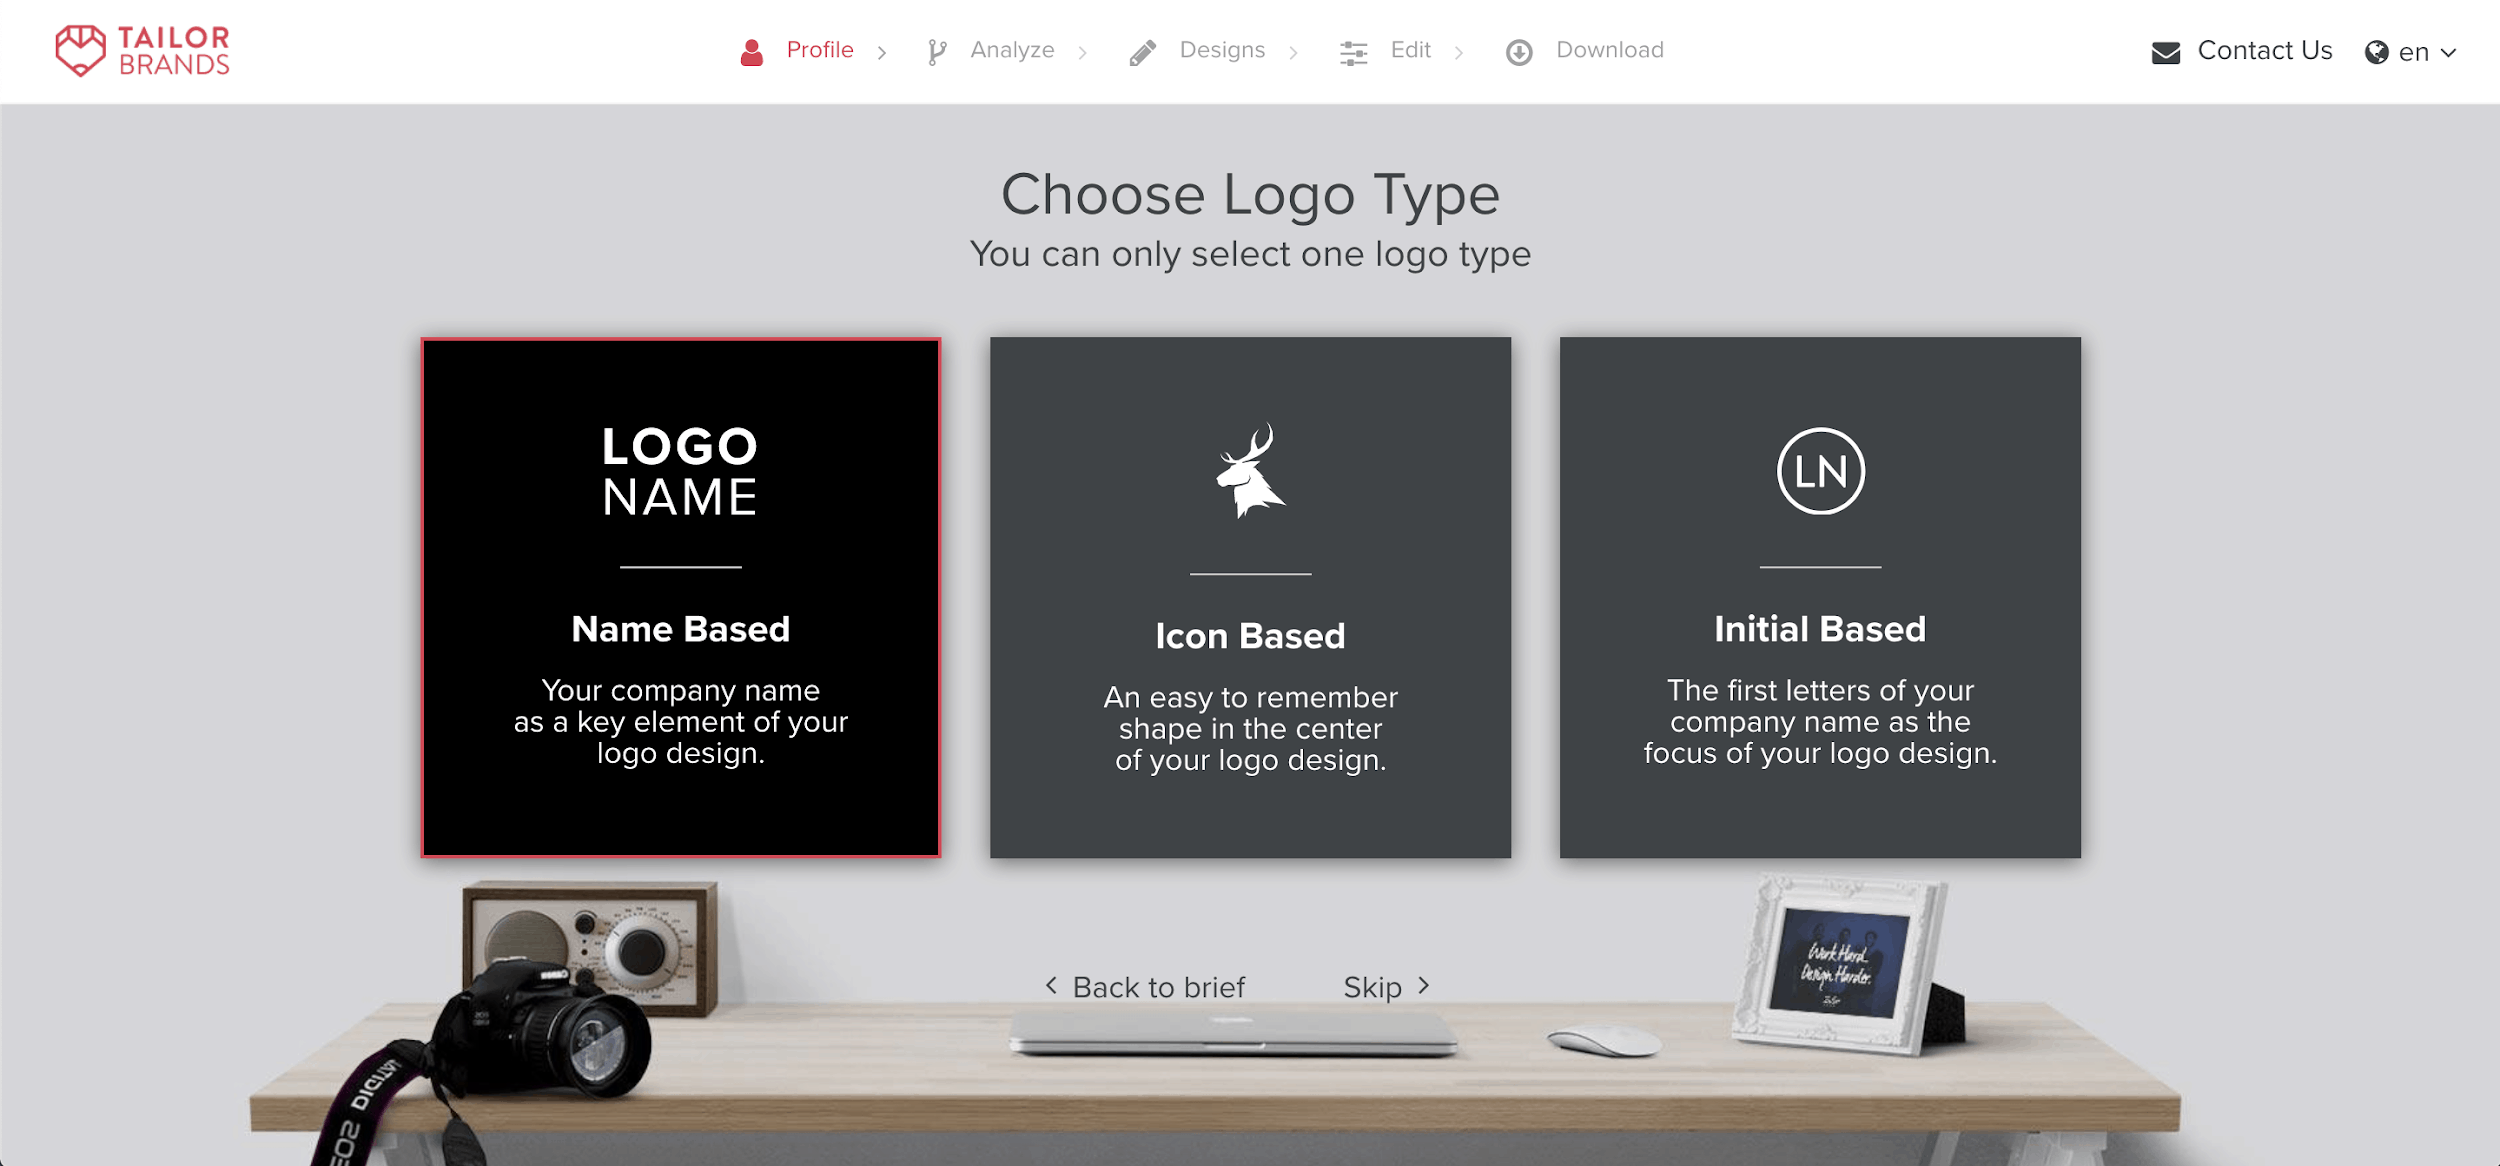 Tailor Brands screenshot - Choose logo type